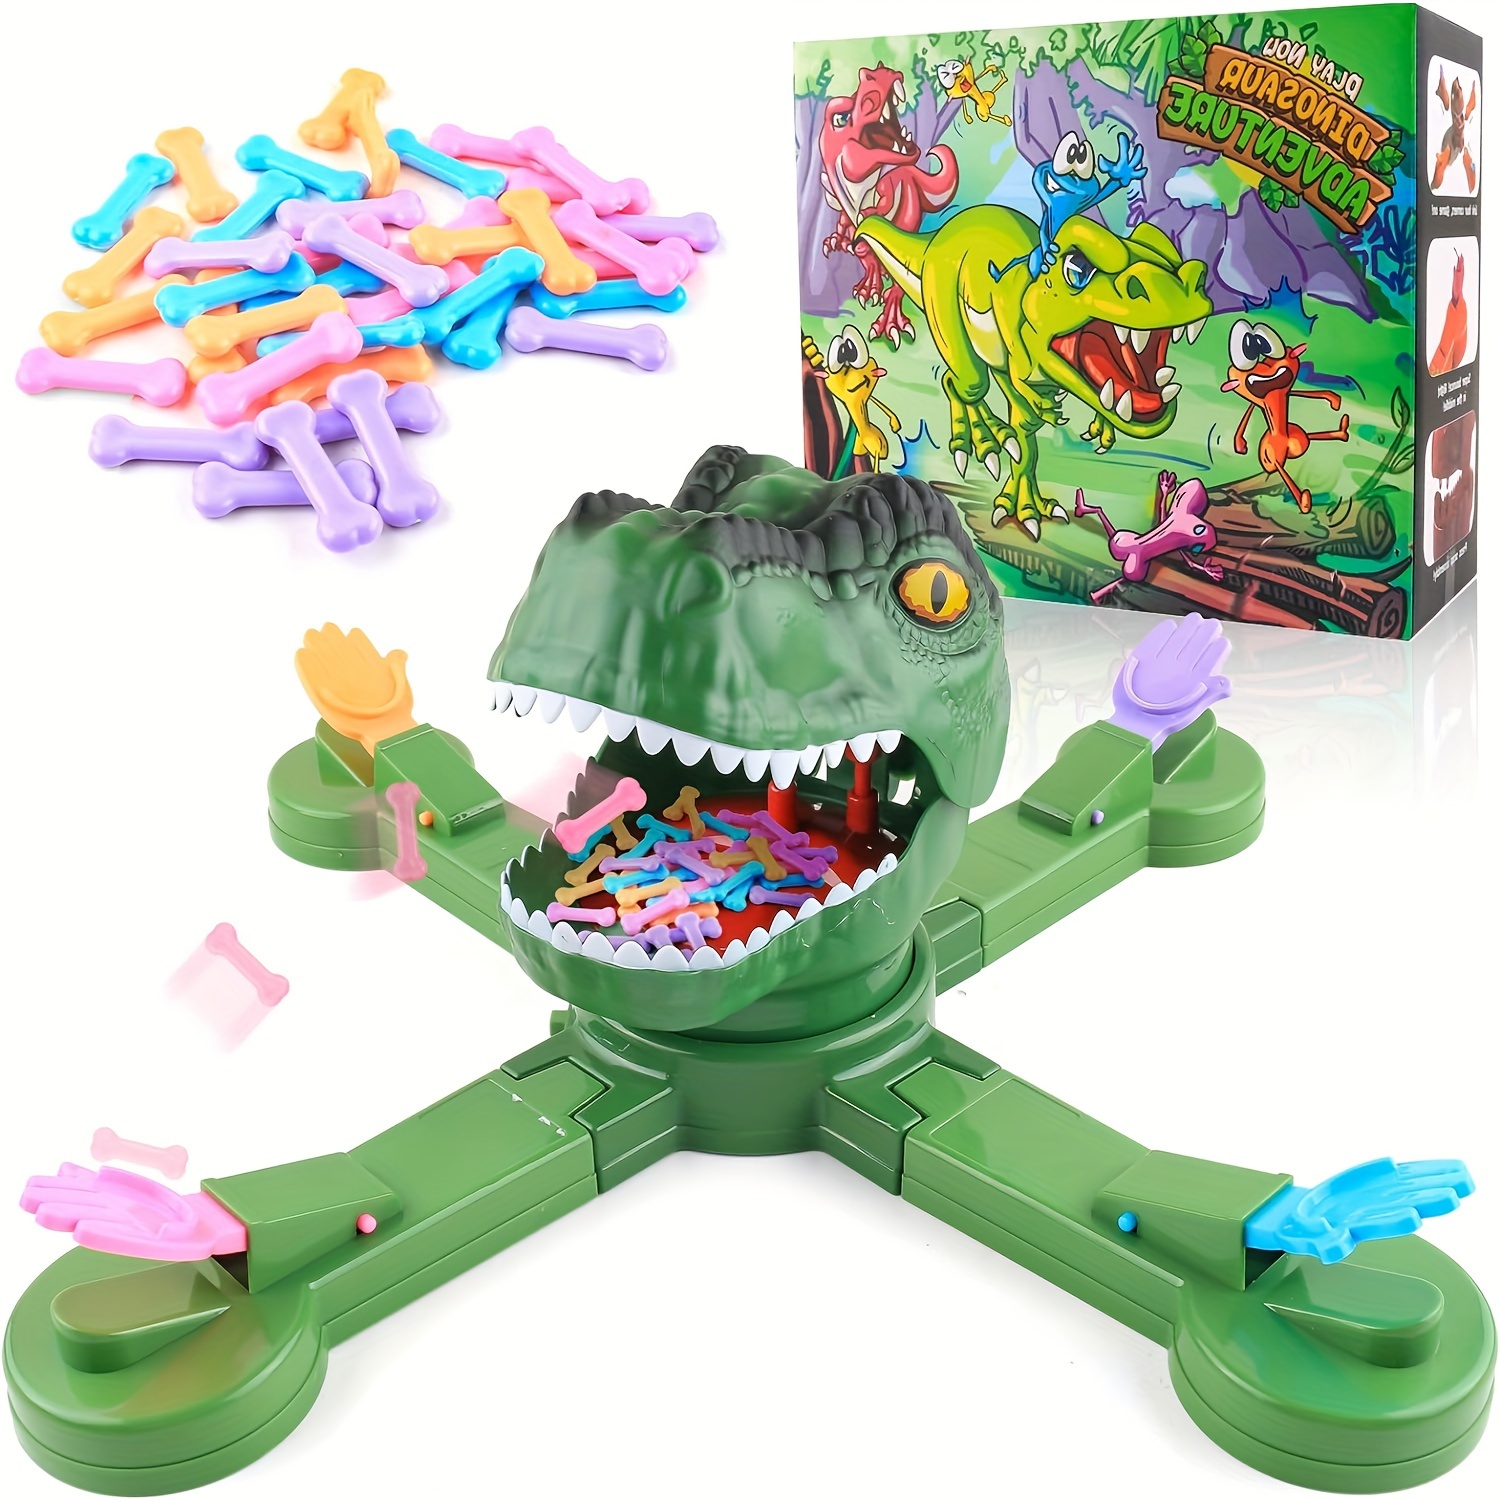 

Feed Dino Scramble Game, Family Party Entertainment Game